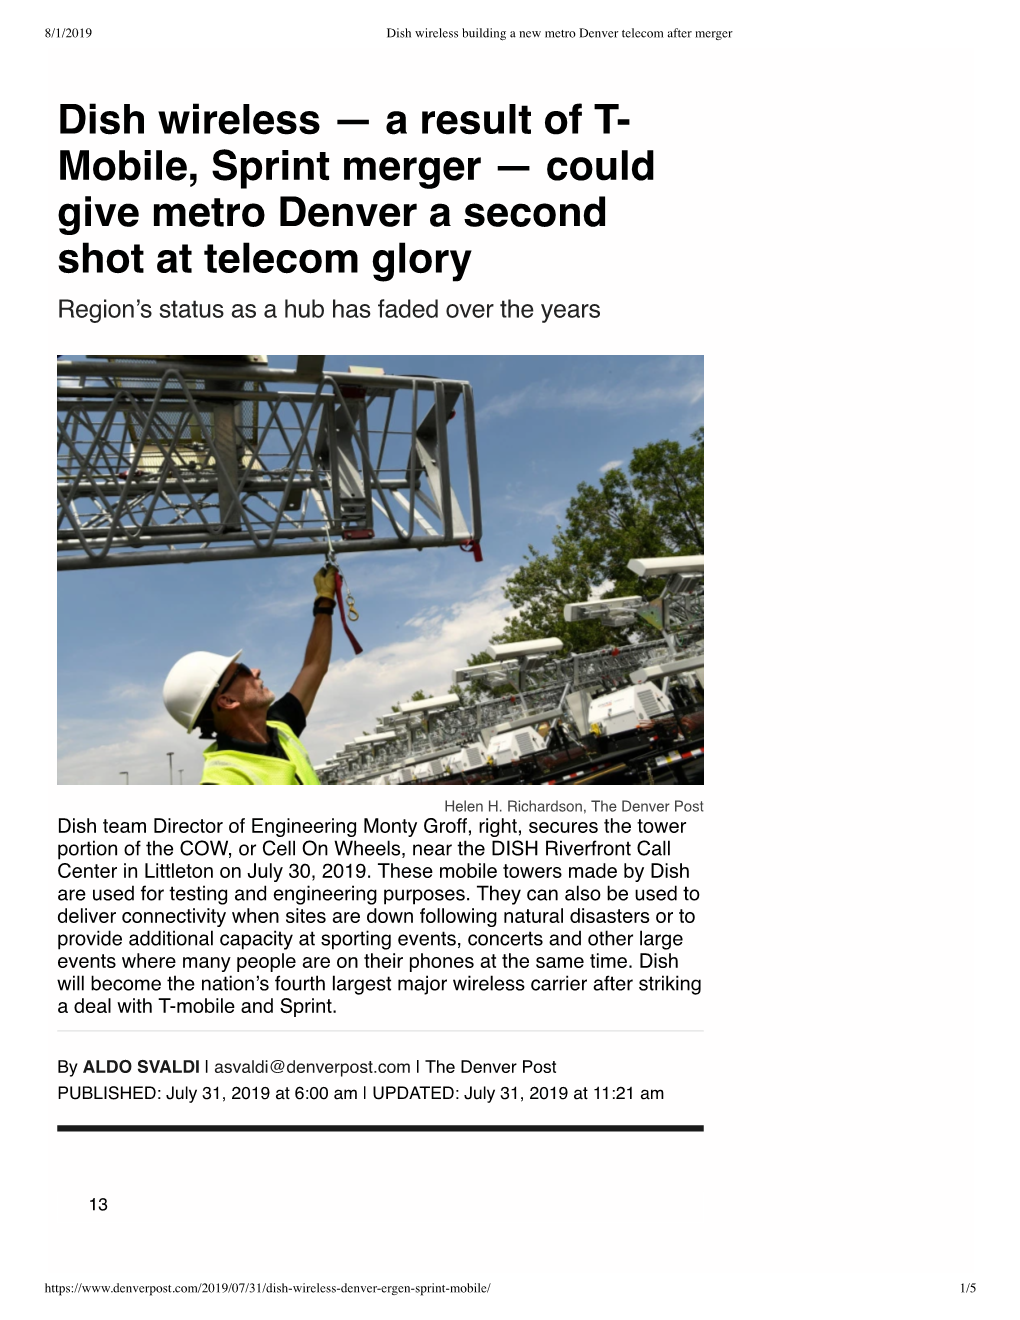 Dish Wireless Building a New Metro Denver Telecom After Merger